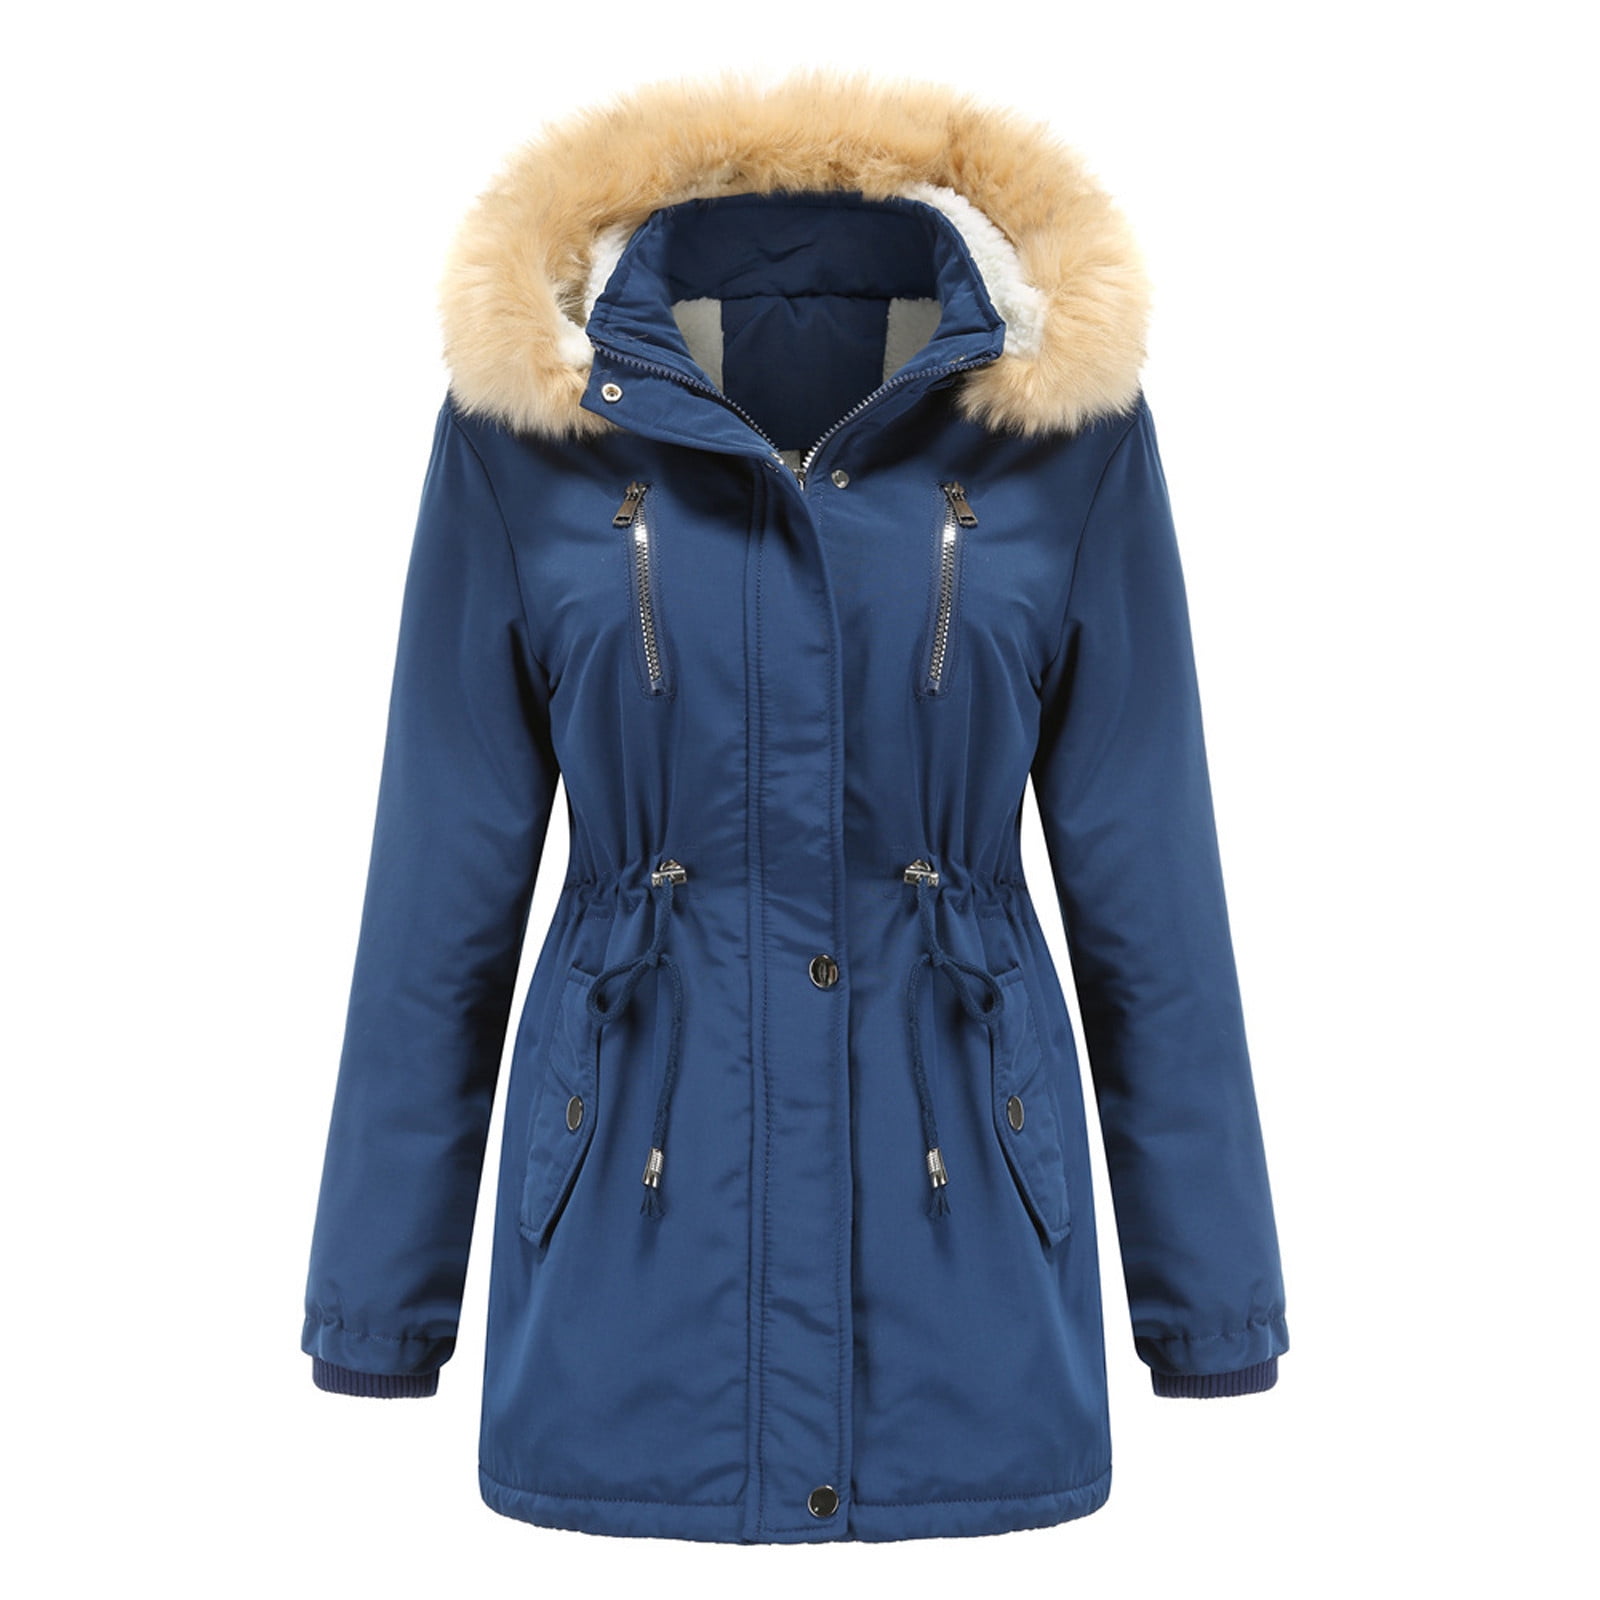 Winter Coats Jackets for Women Thick Warm Fleece lined parka jackets ...